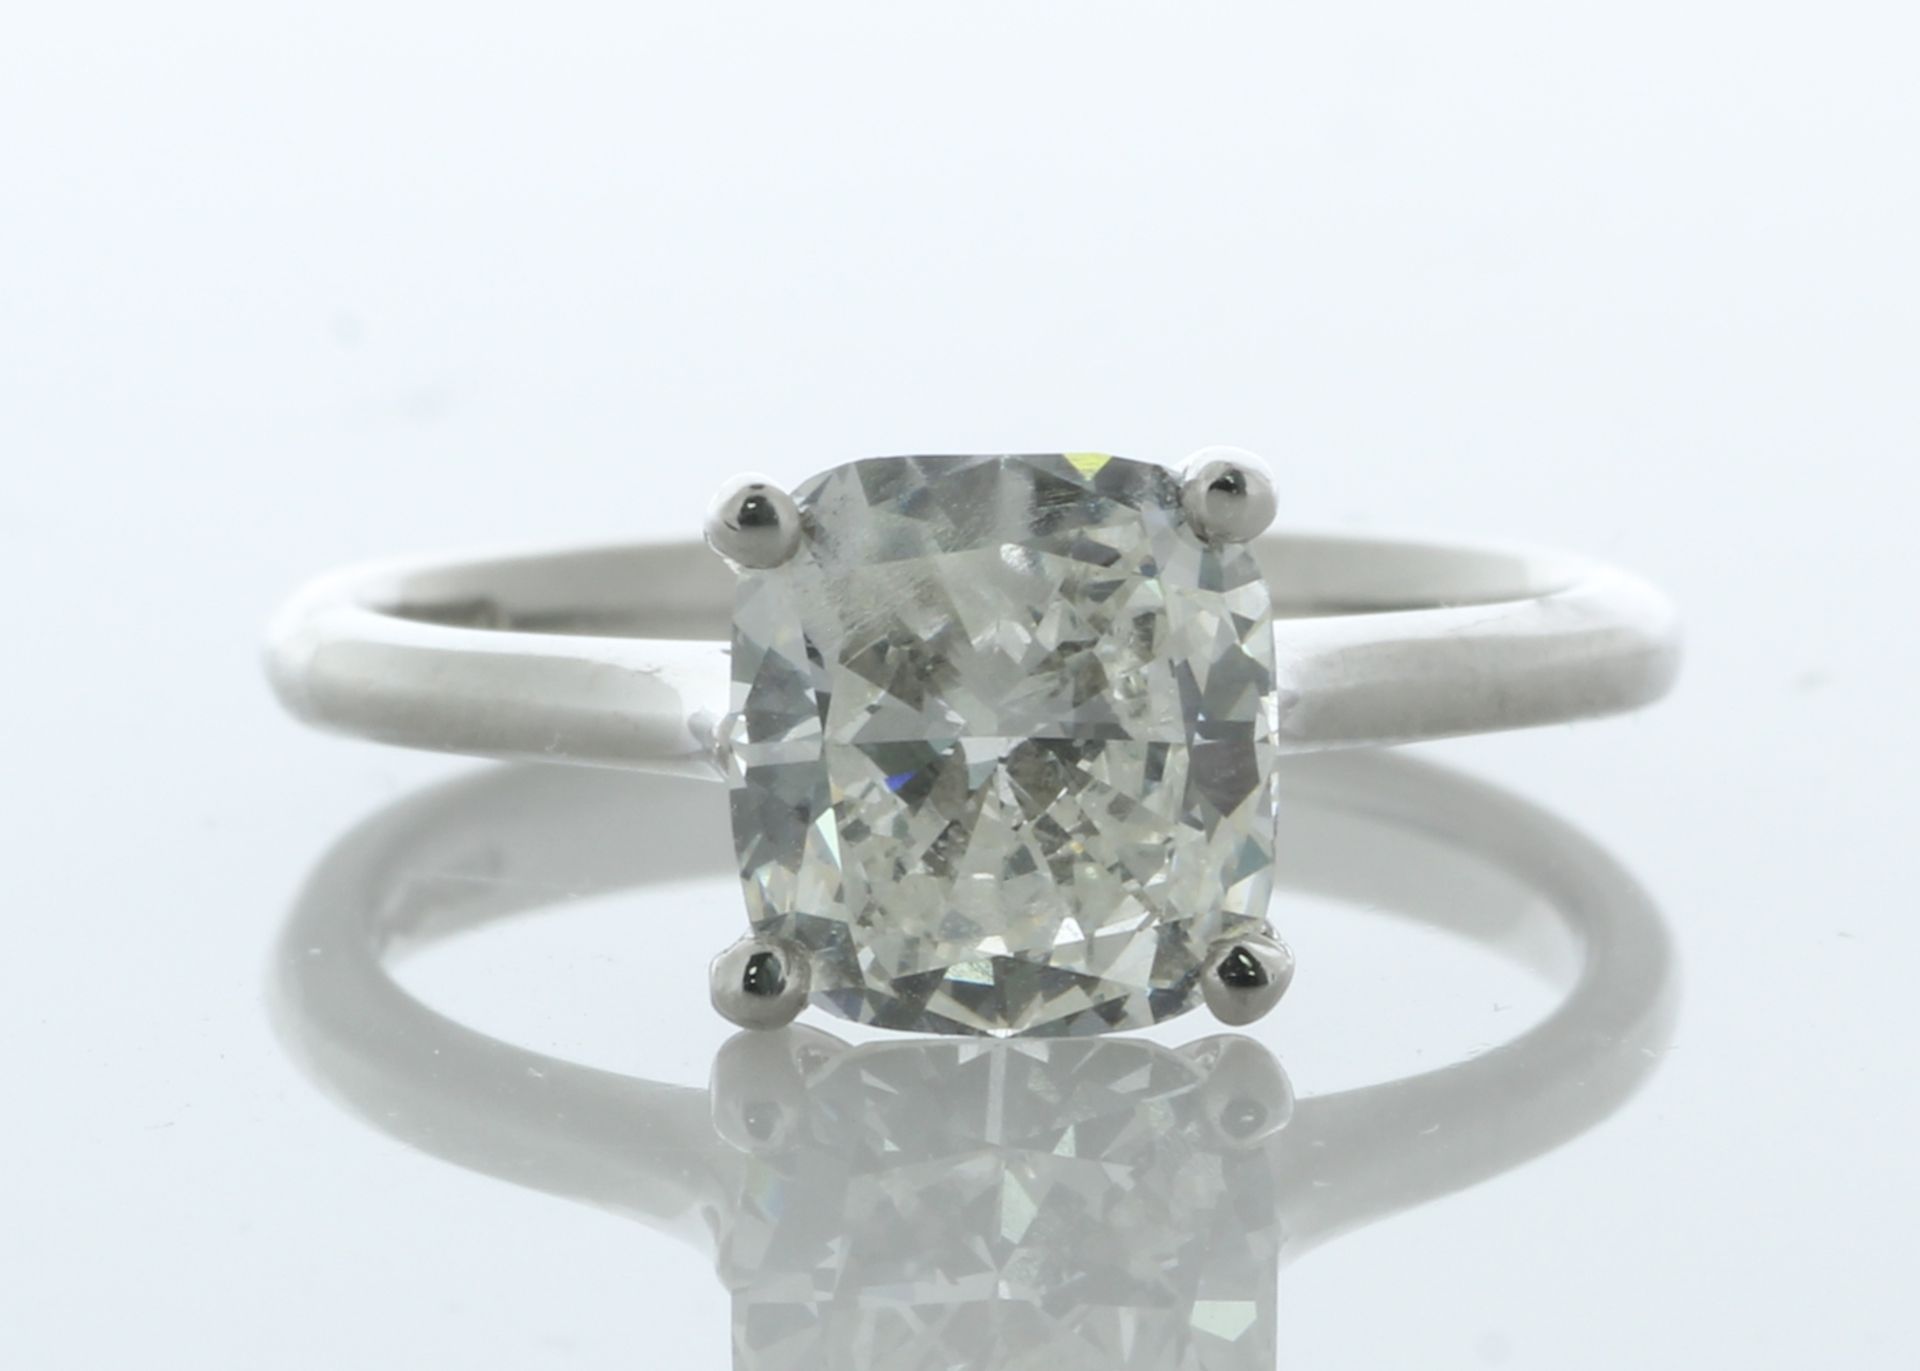 Platinum Single Stone Cushion Cut Diamond Ring 2.02 Carats - Valued by GIE £106,900.00 - Platinum